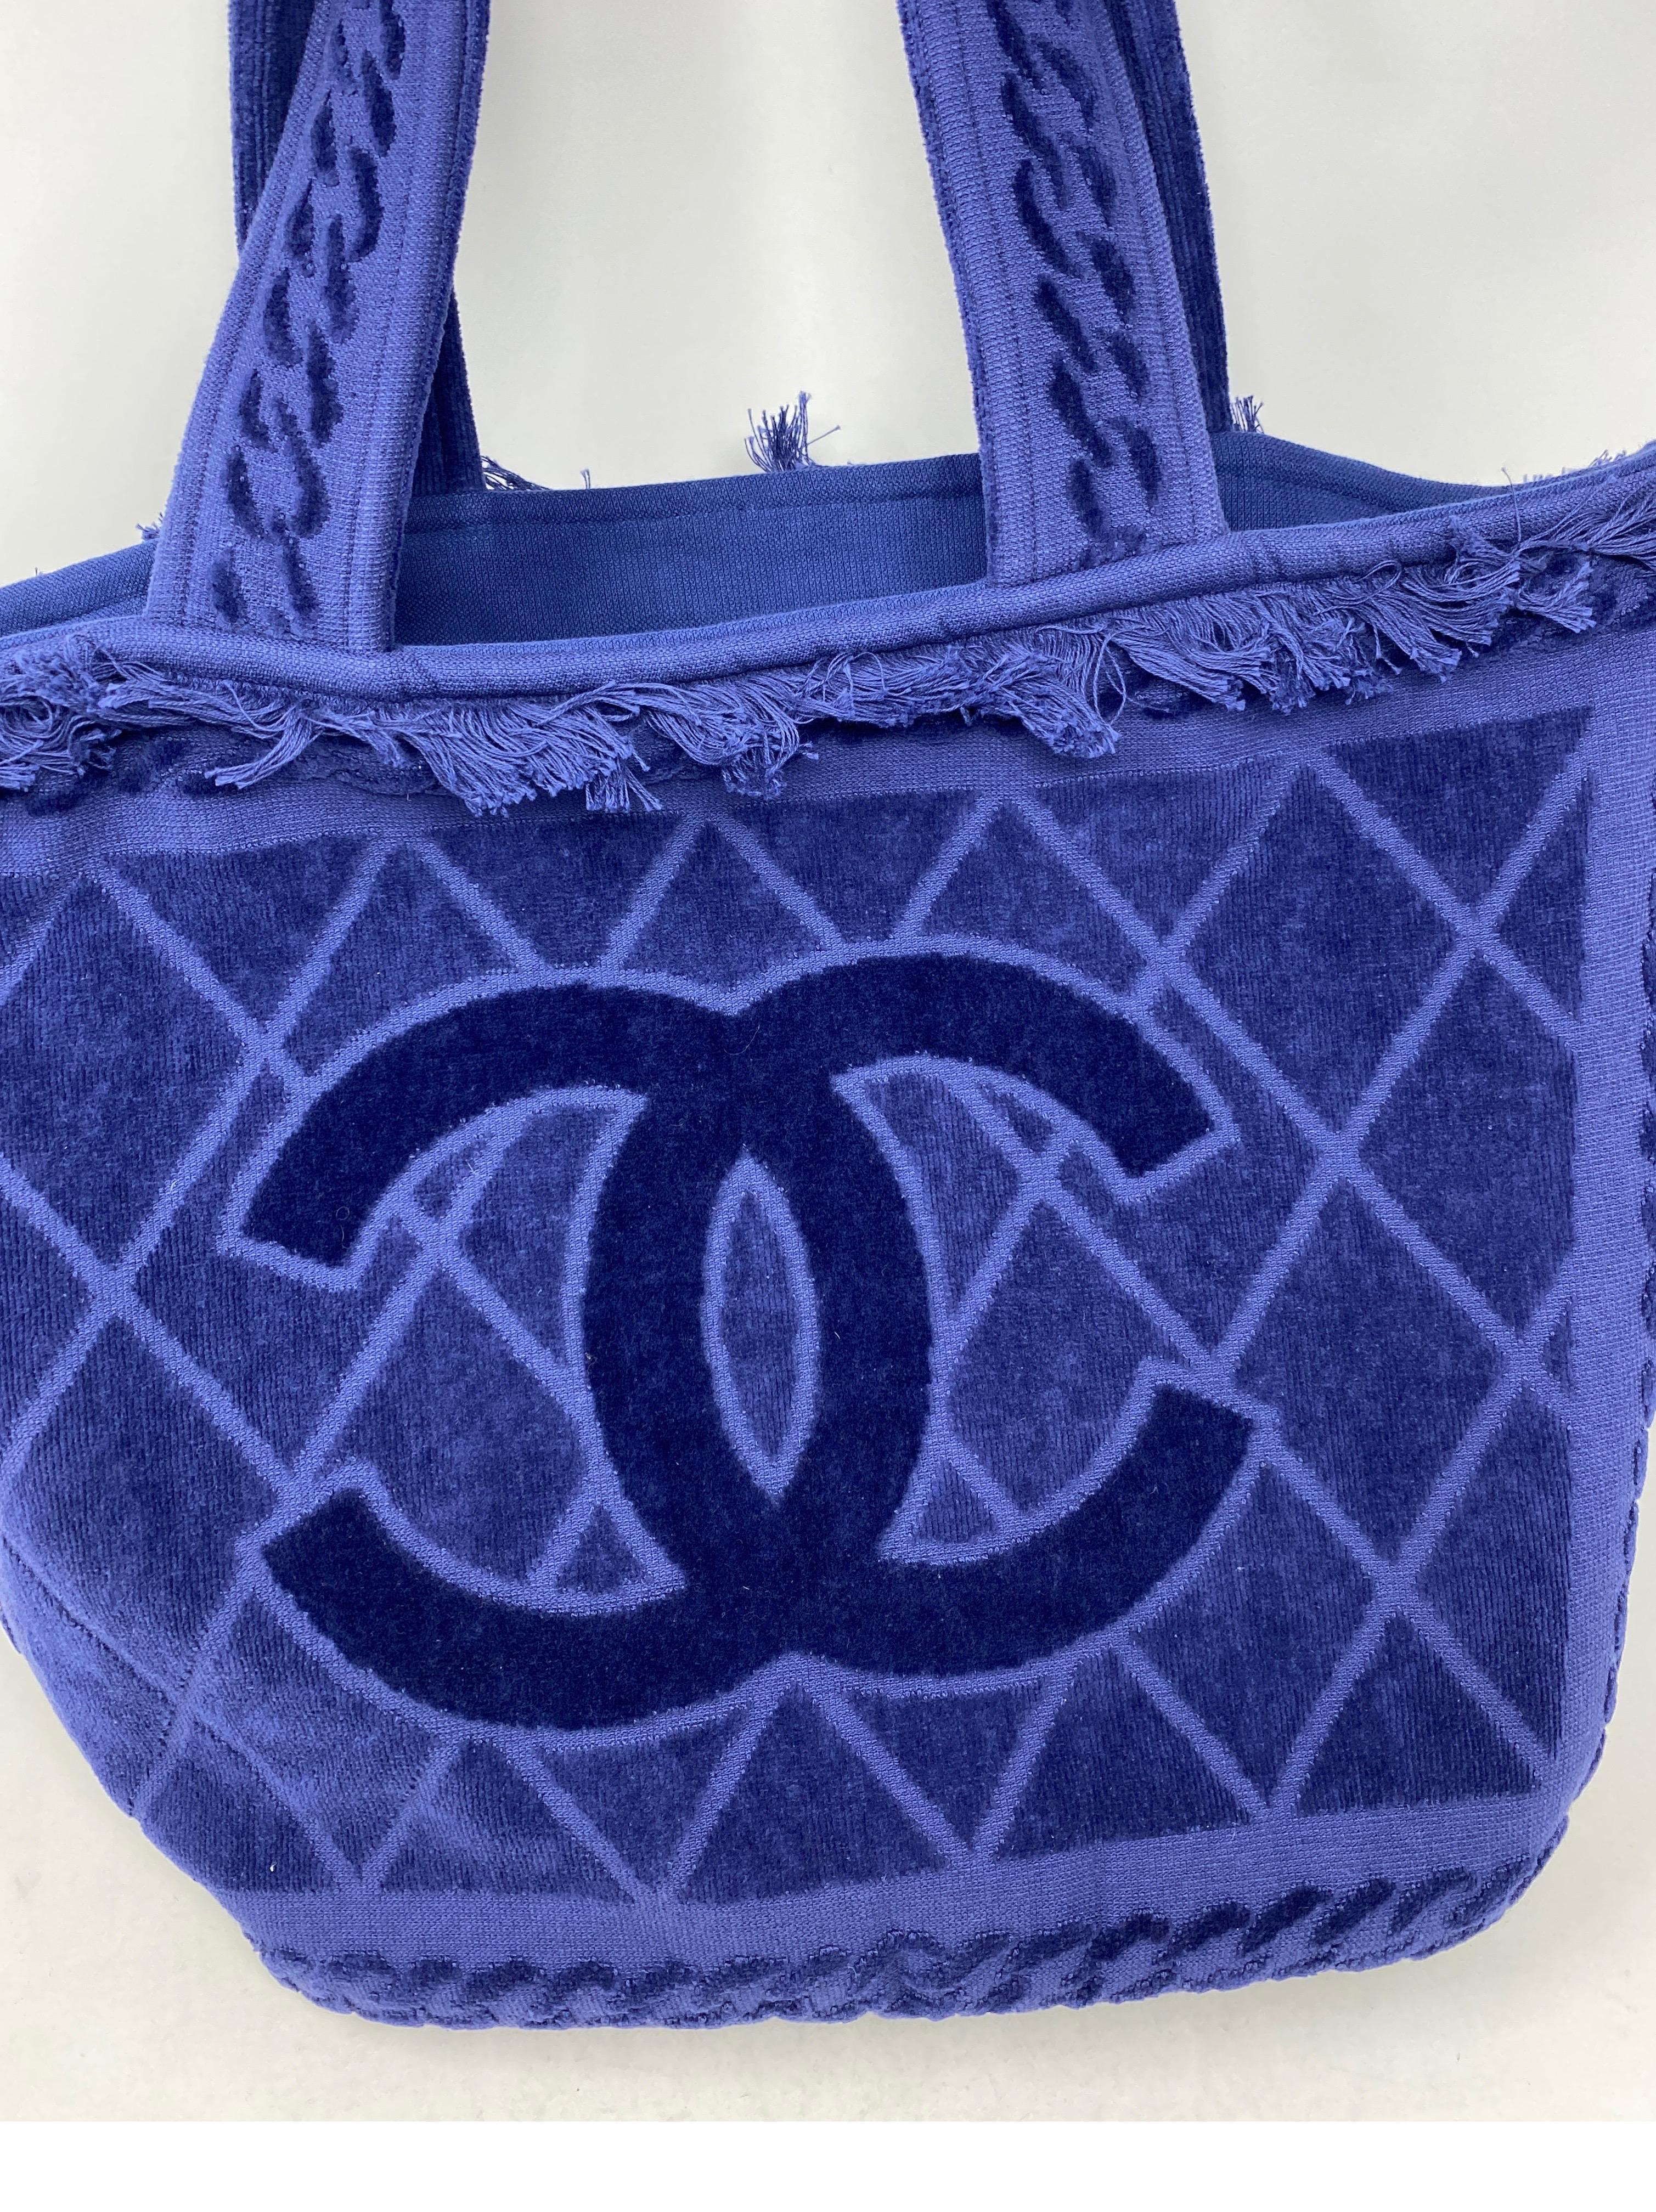 Women's or Men's Chanel Blue Towel Tote Bag 